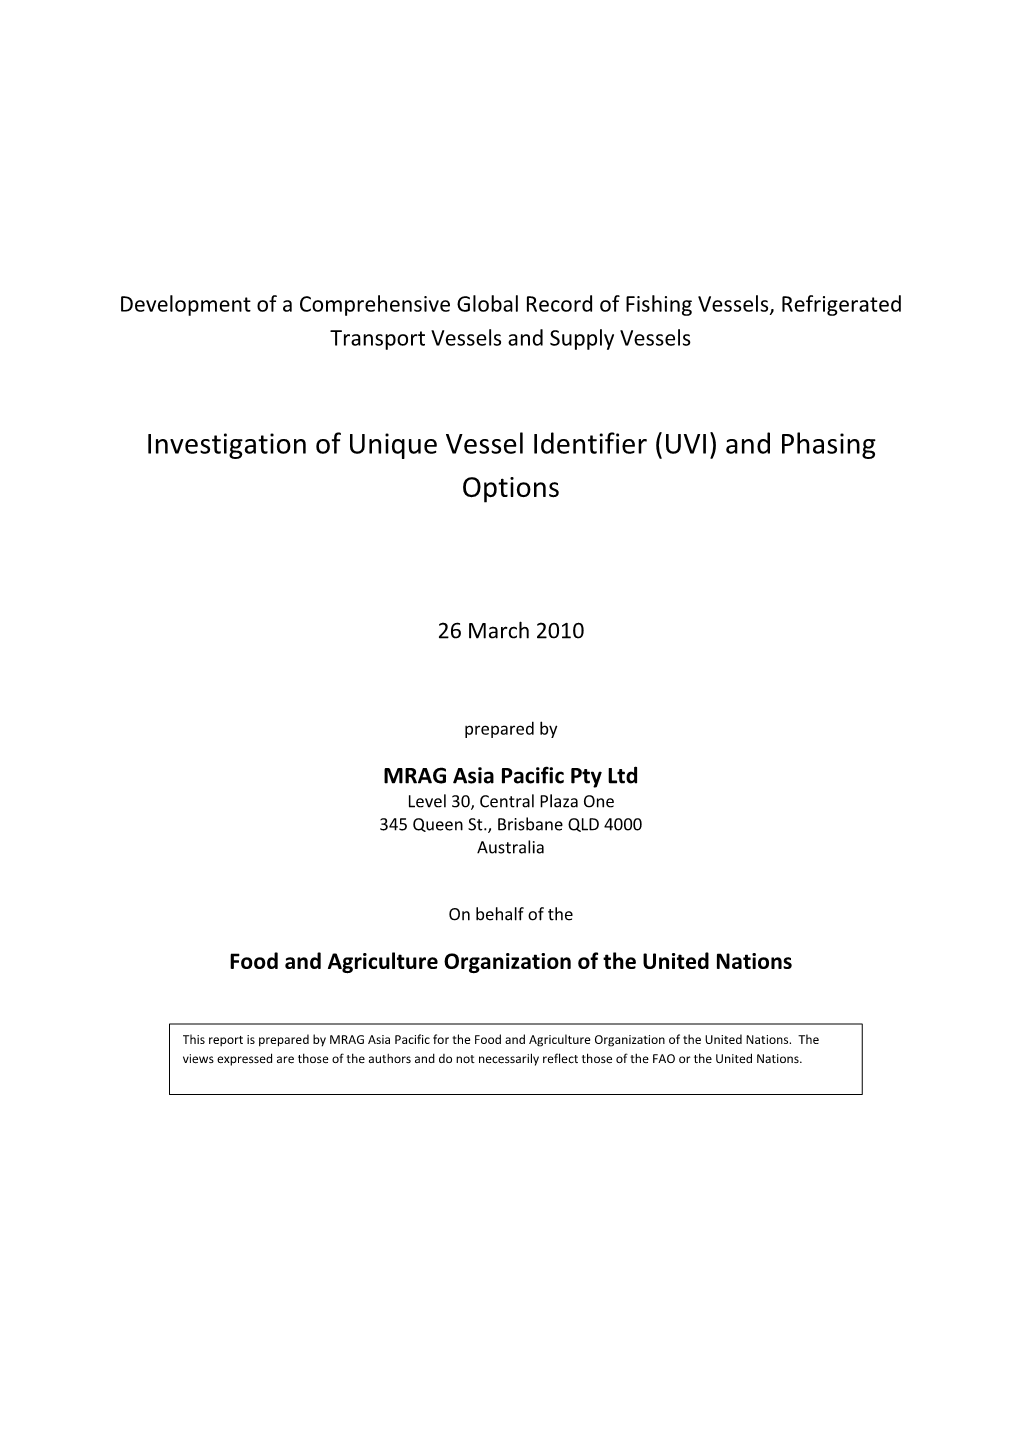 Investigation of Unique Vessel Identifier (UVI) and Phasing Options